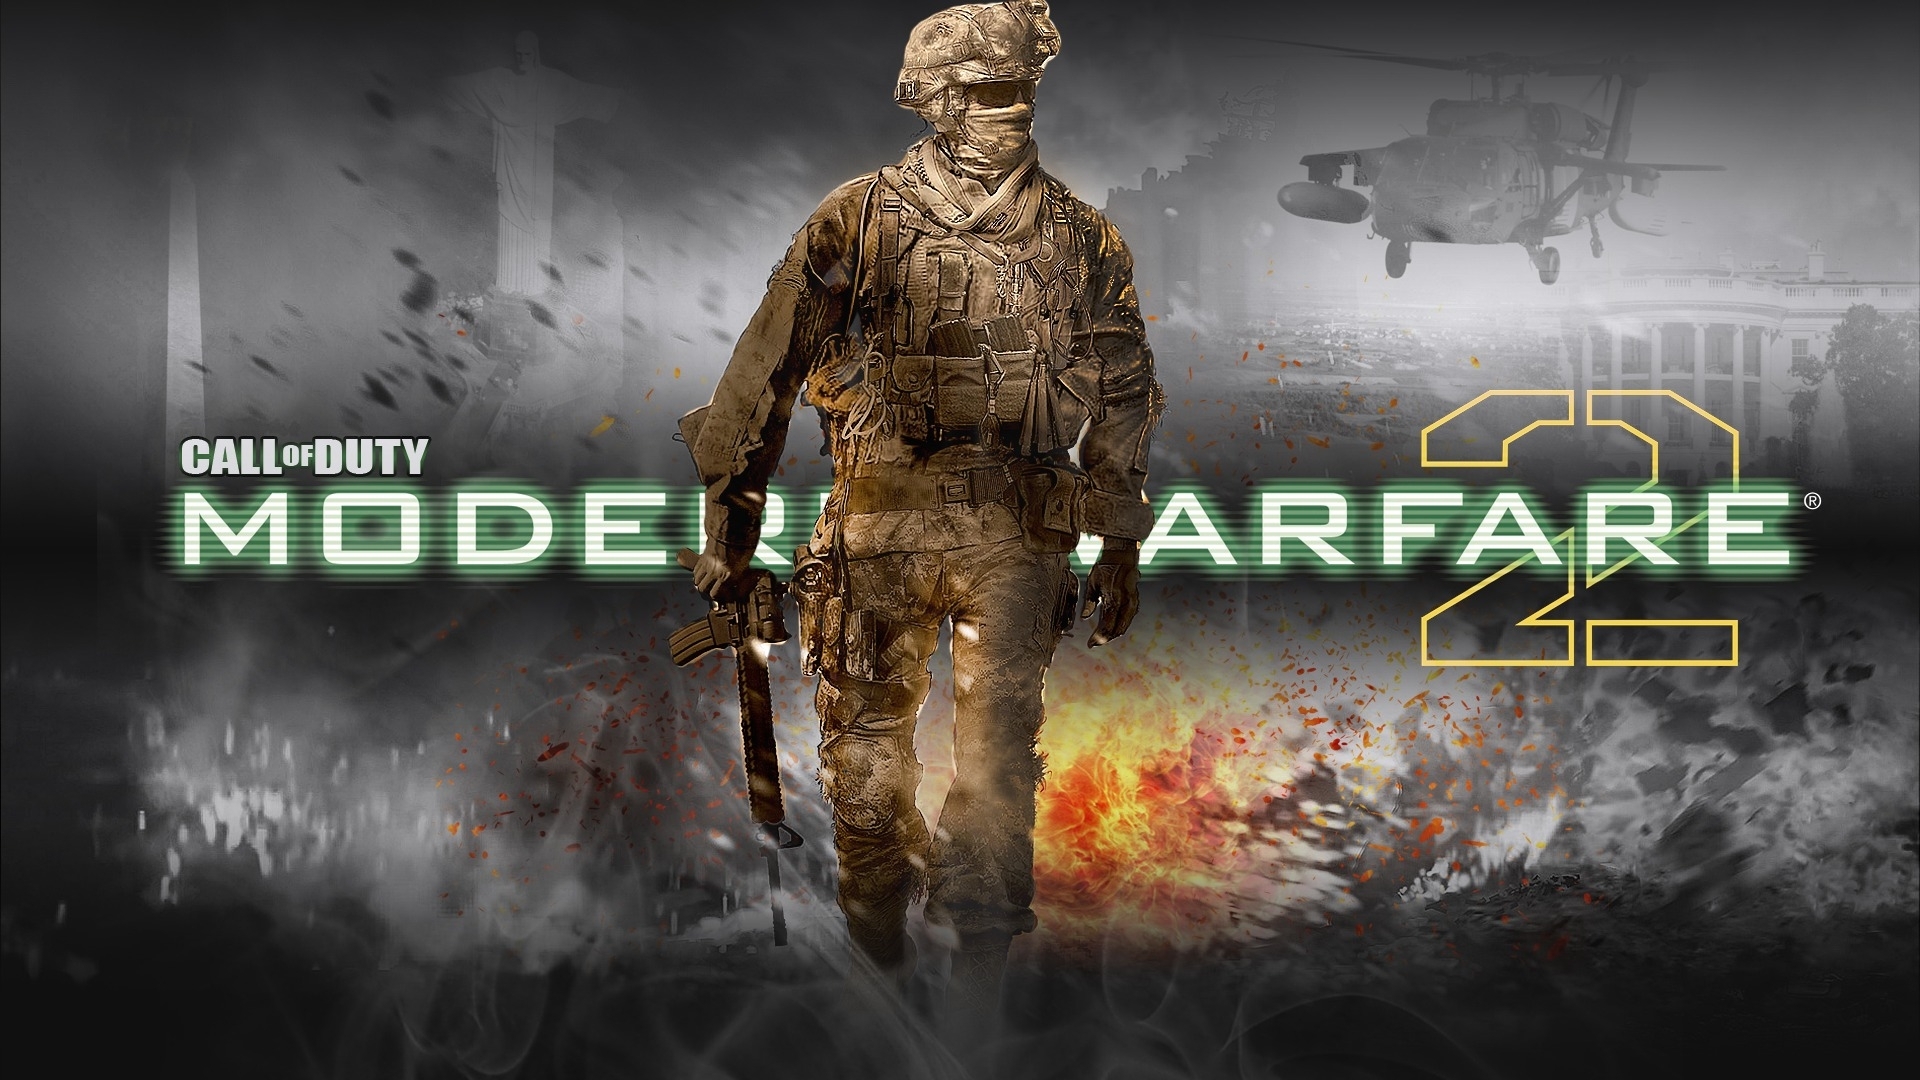 6. "Modern Warfare Discount Code" on Twitch - wide 8